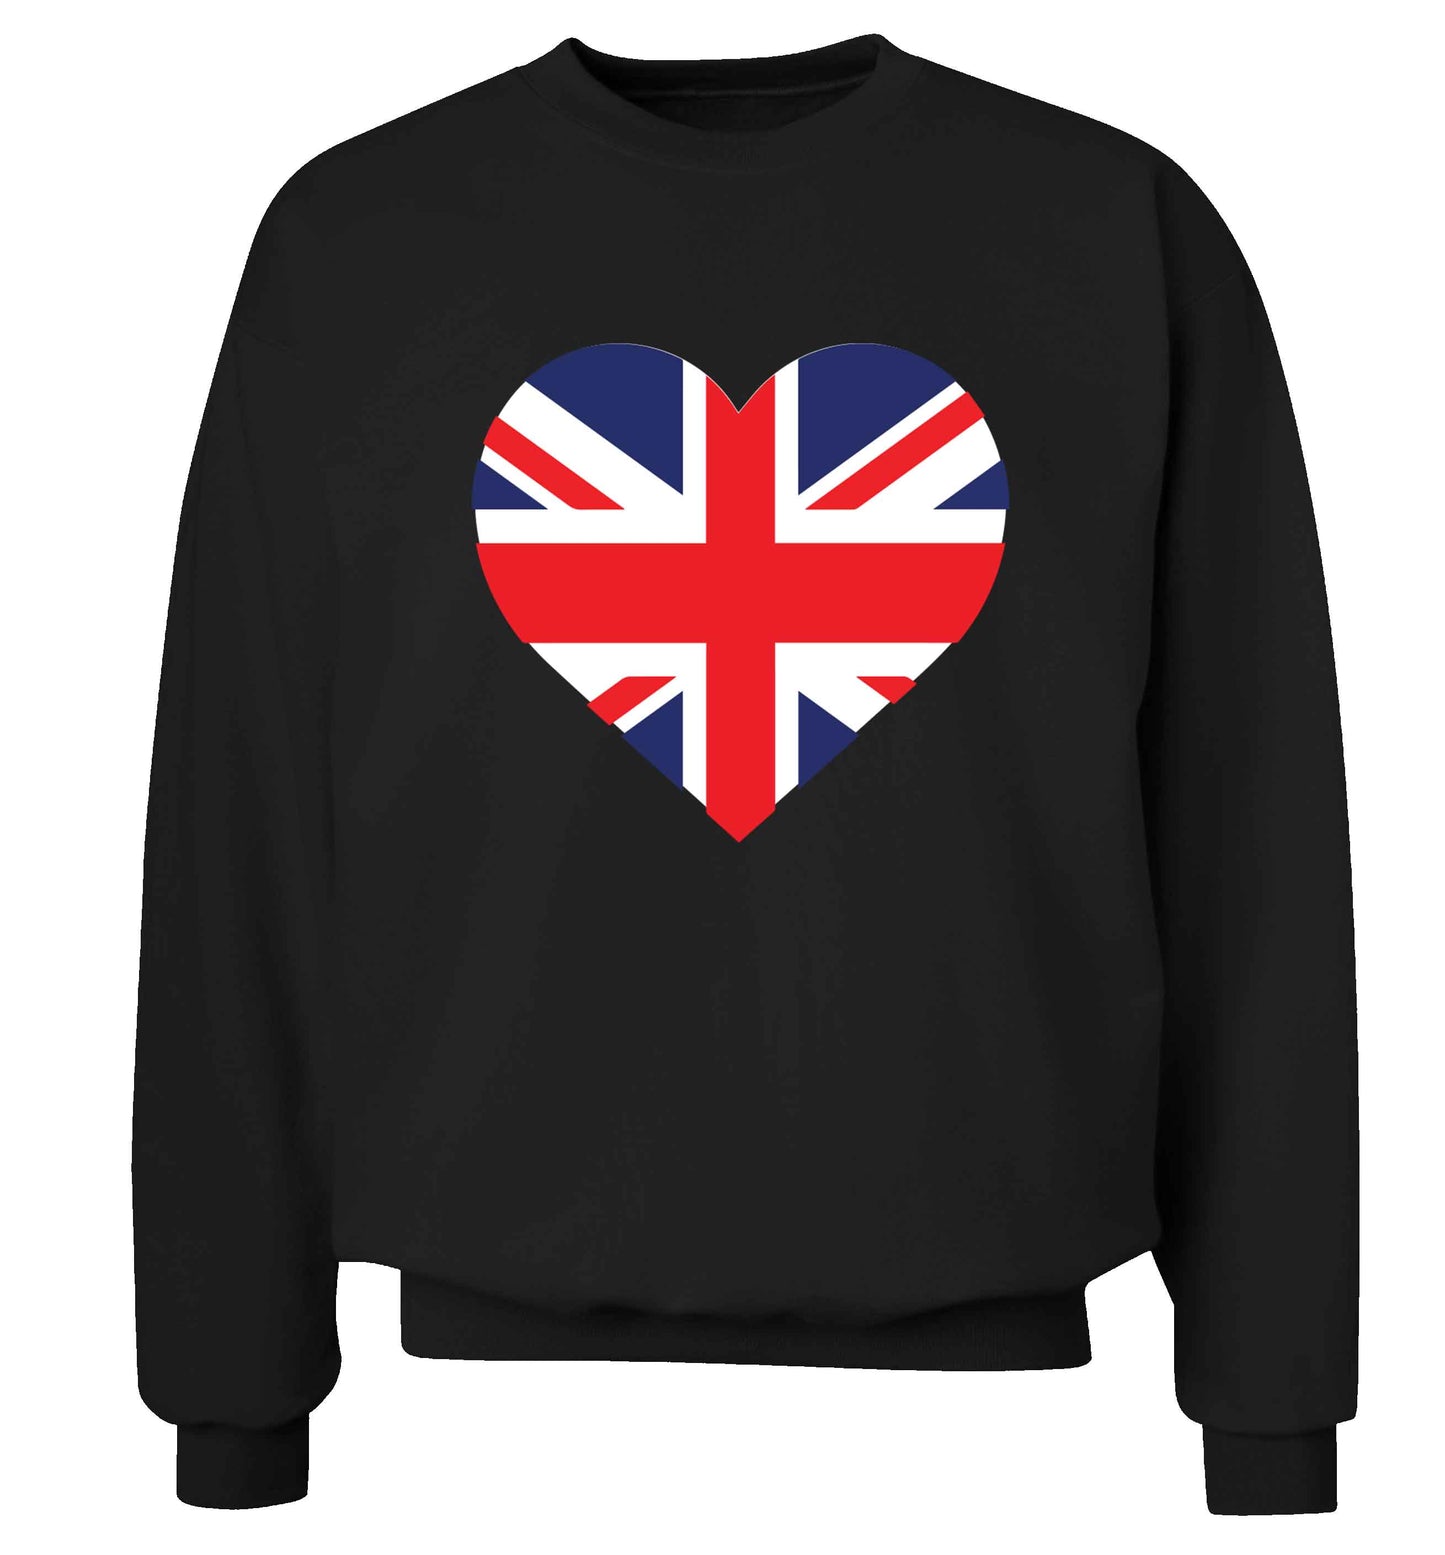 Union Jack Heart adult's unisex black sweater 2XL